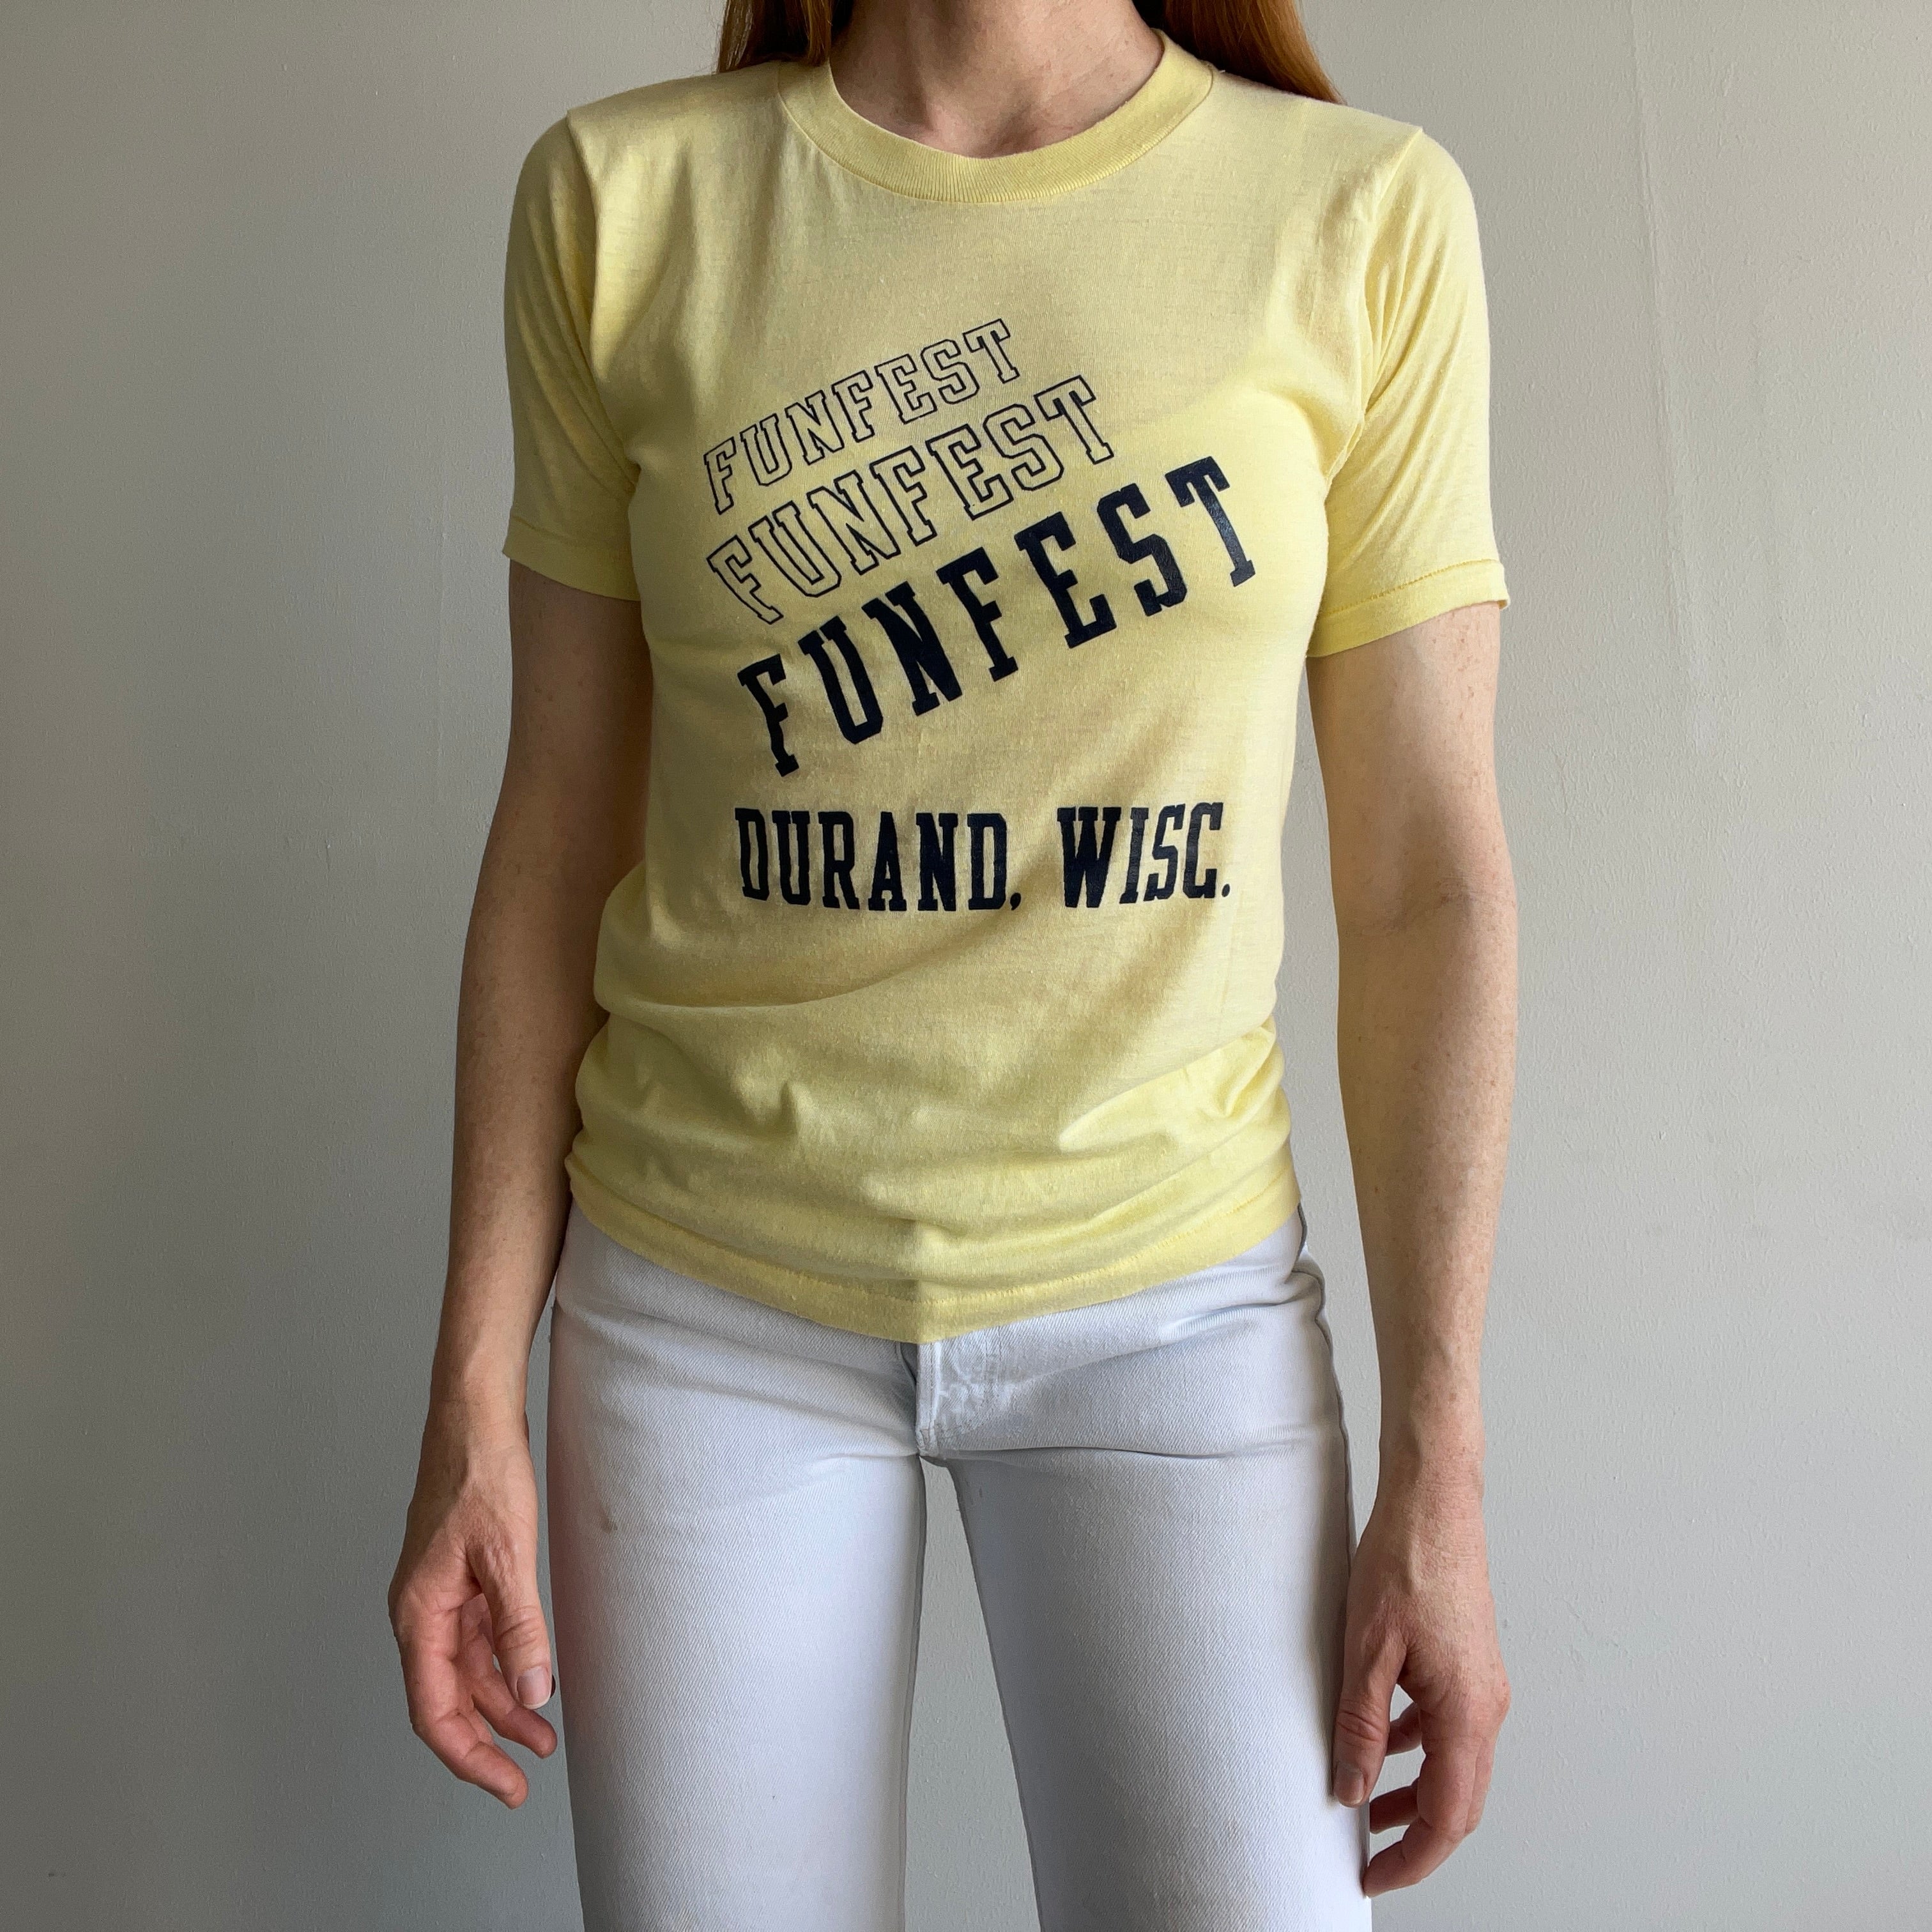 1970s FunFest Durand, Wisconsin T-Shirt